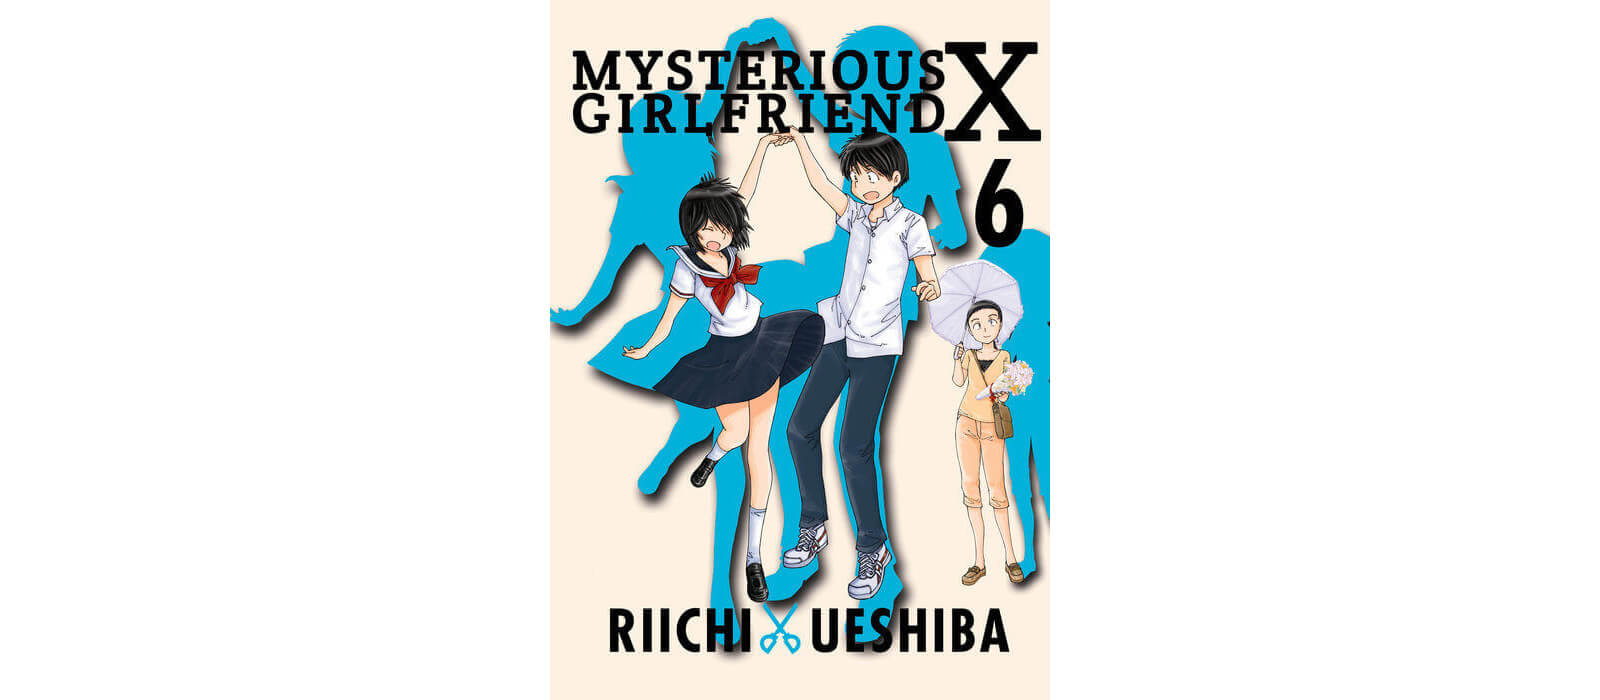 June 2017 Manga Releases Mysterious - Girlfriend X Volume 6